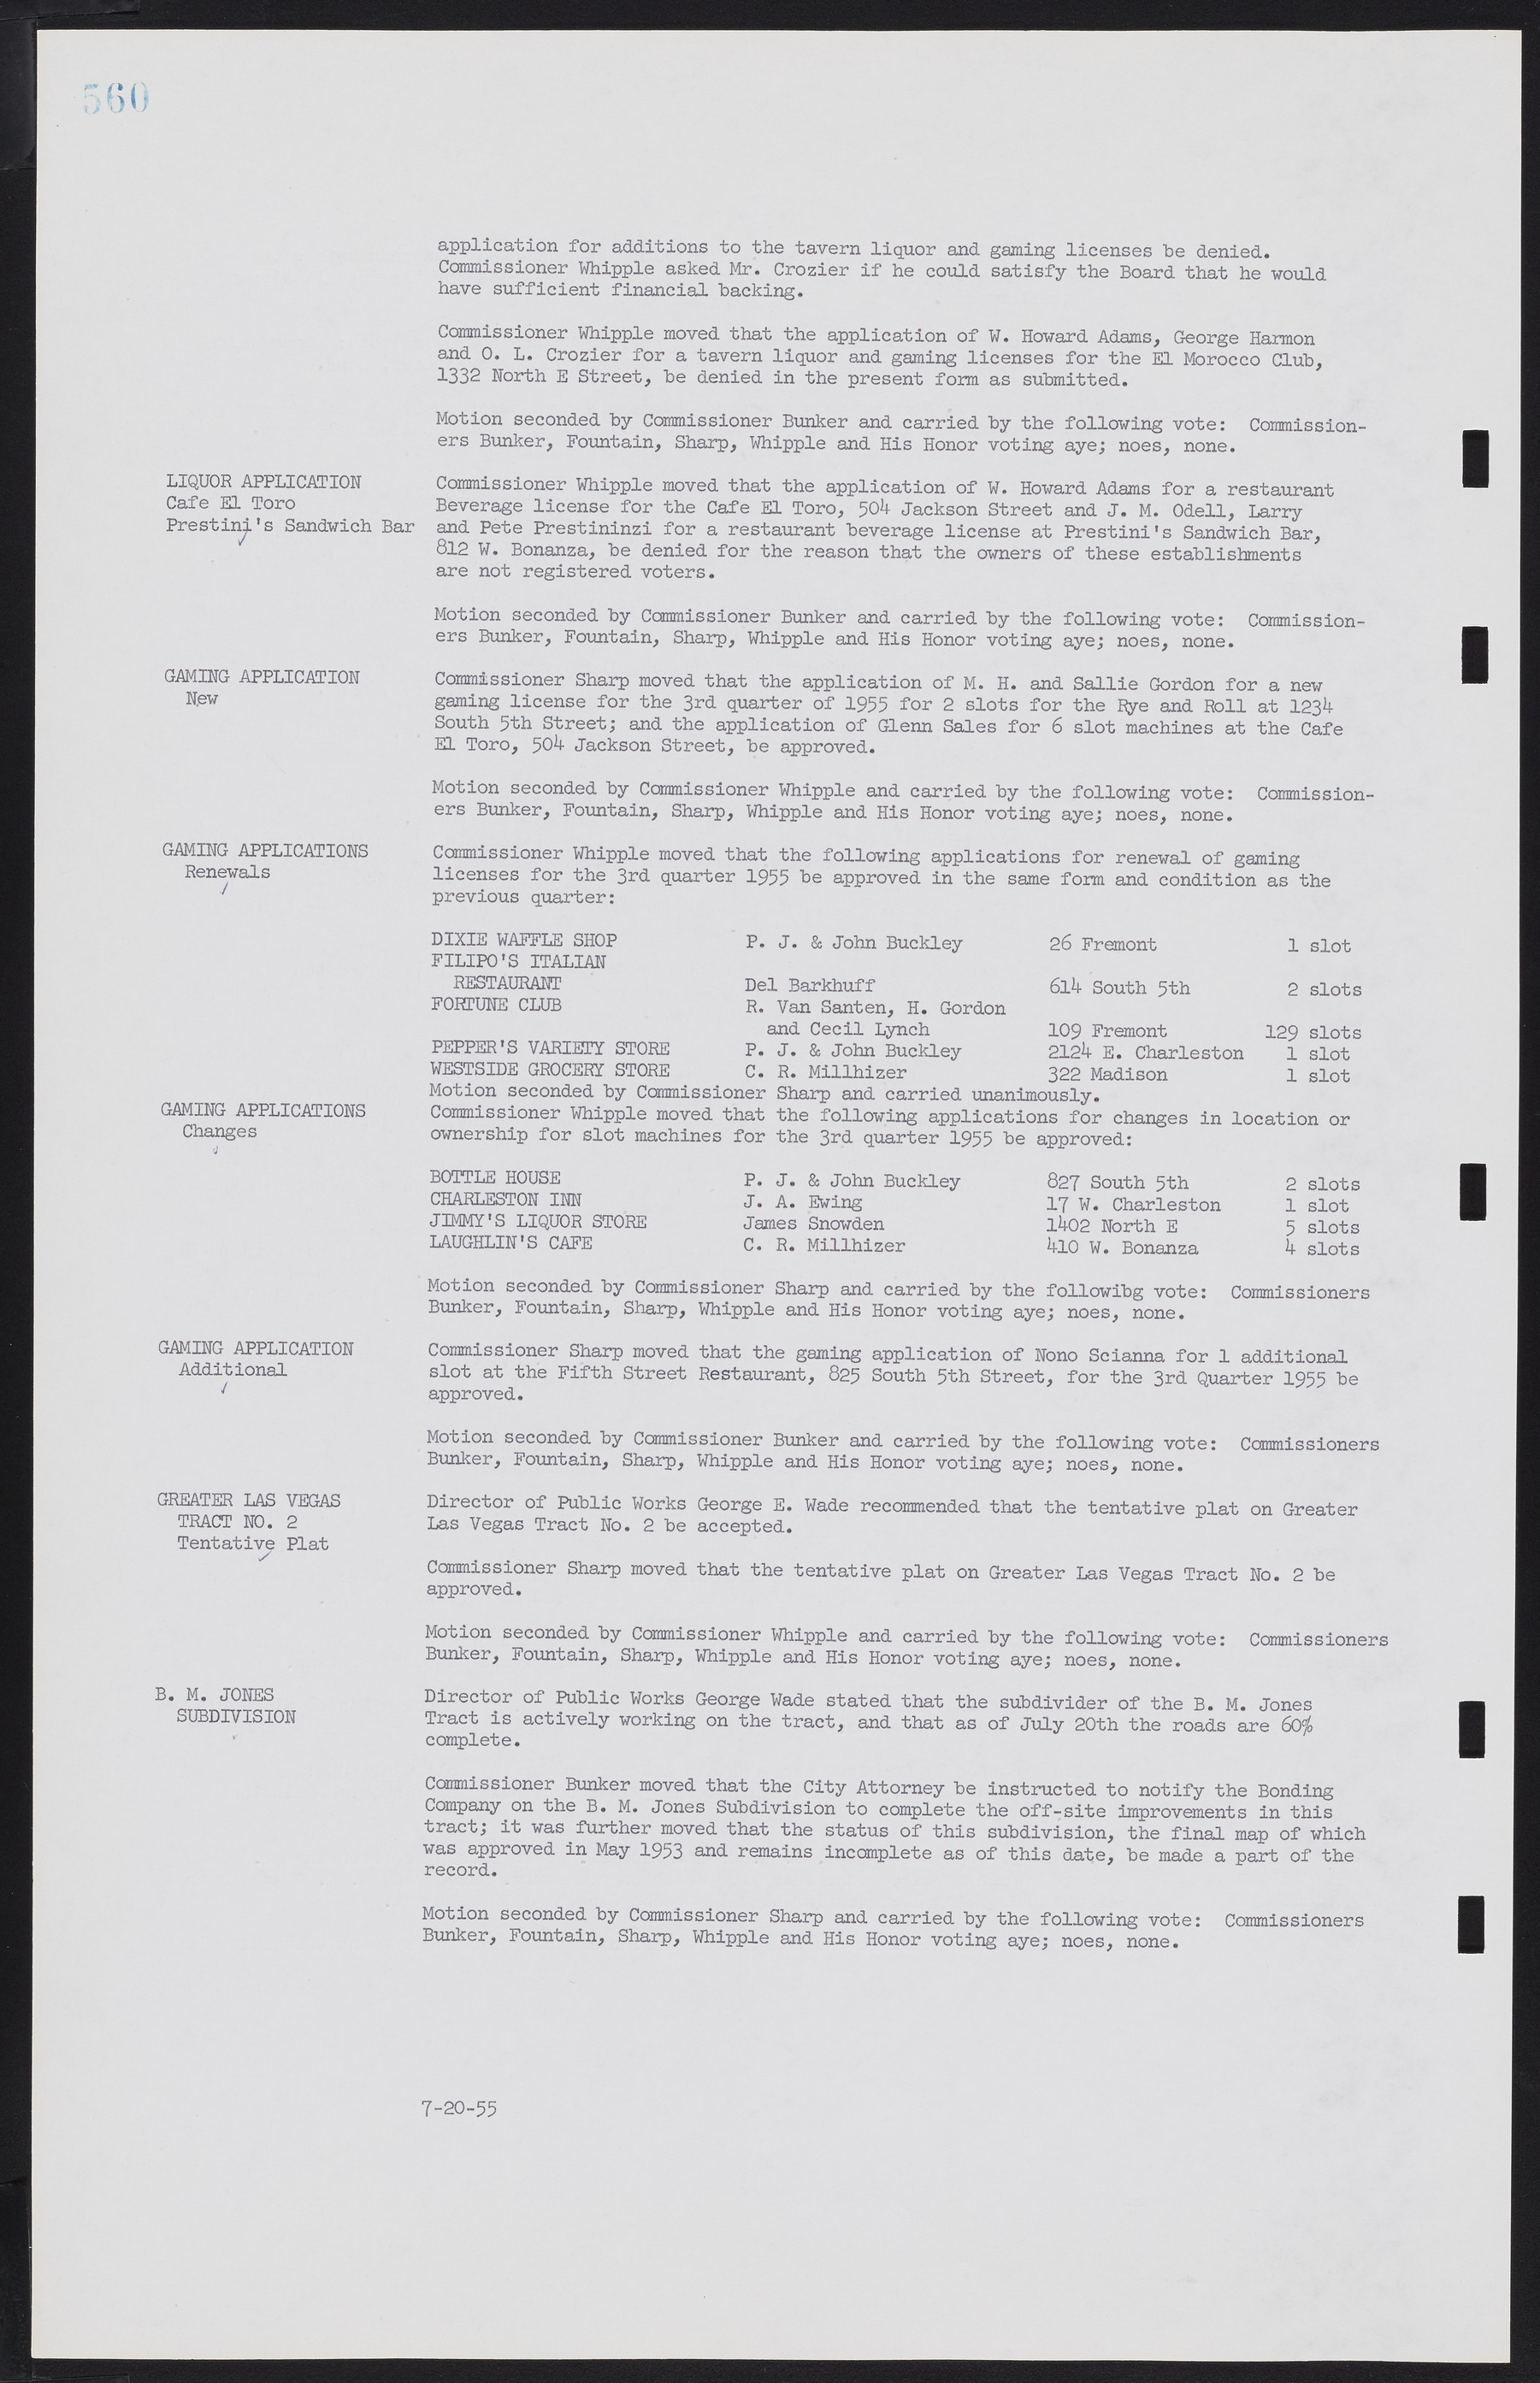 Las Vegas City Commission Minutes, February 17, 1954 to September 21, 1955, lvc000009-566